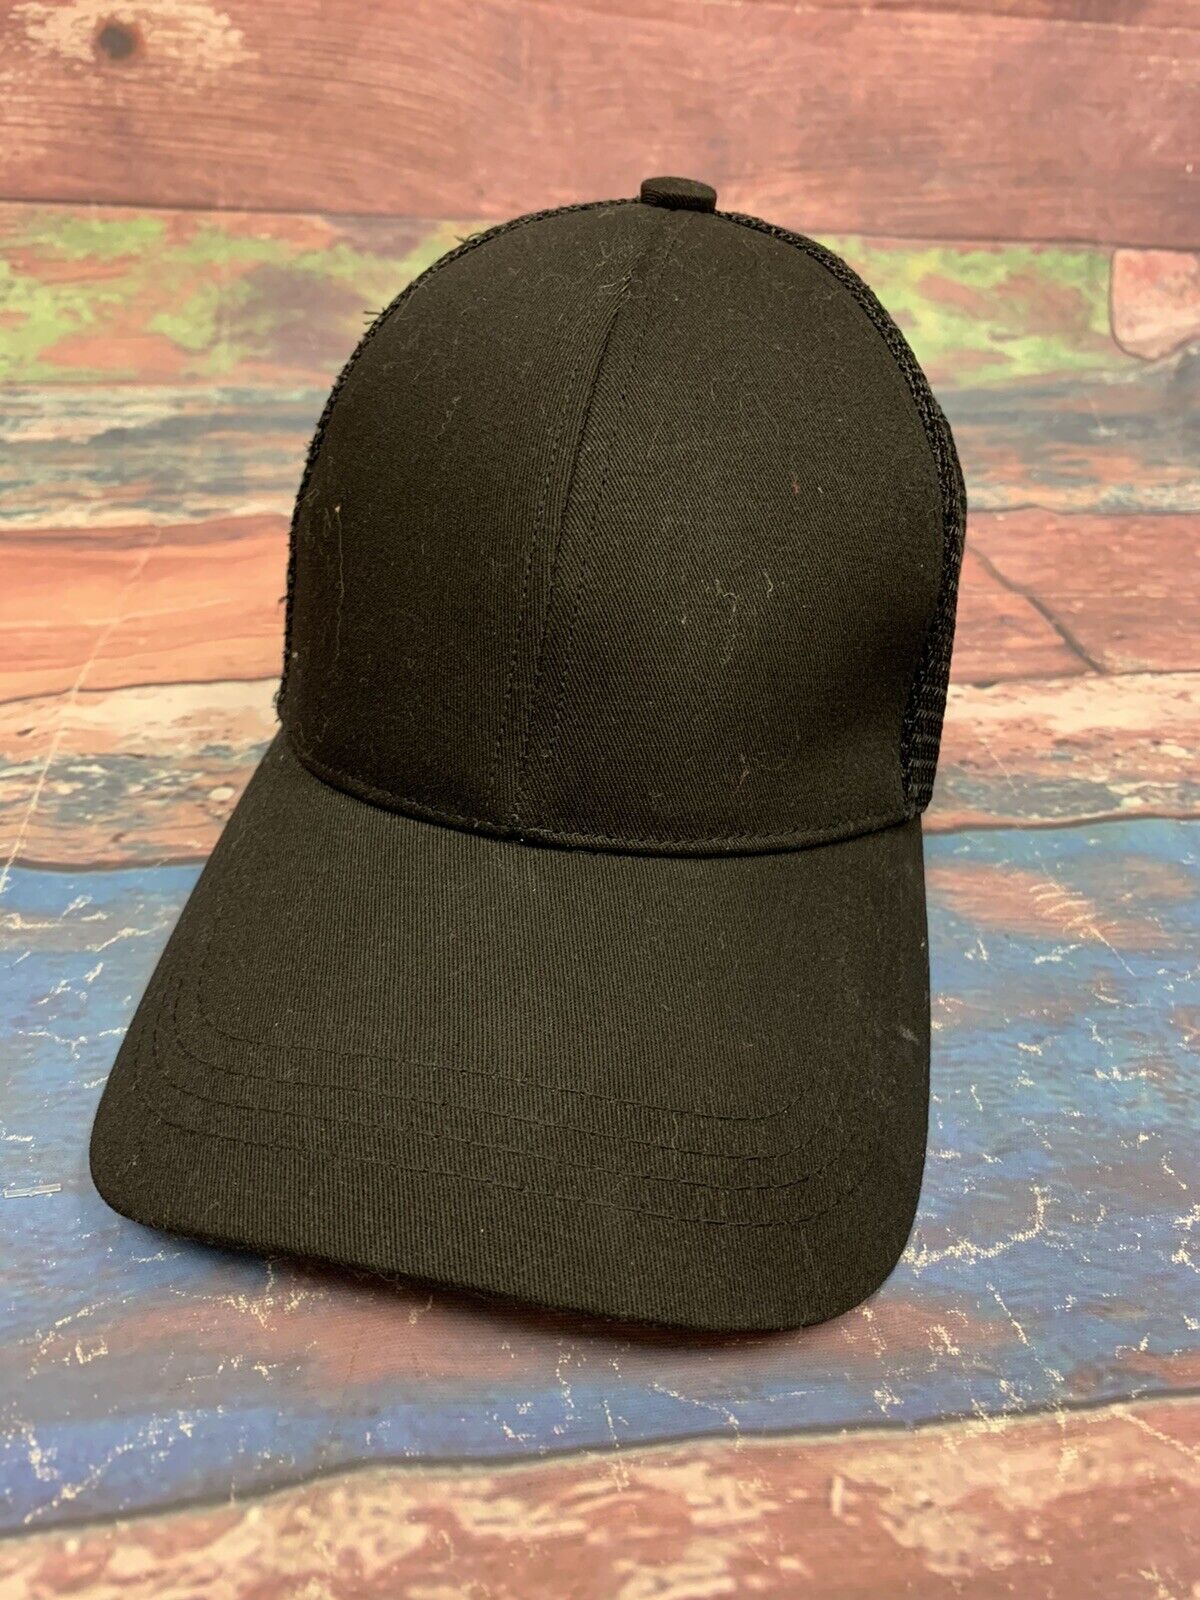 C.C Black Ponytail Mesh Adjustable Women’s Trucker   Hat New*